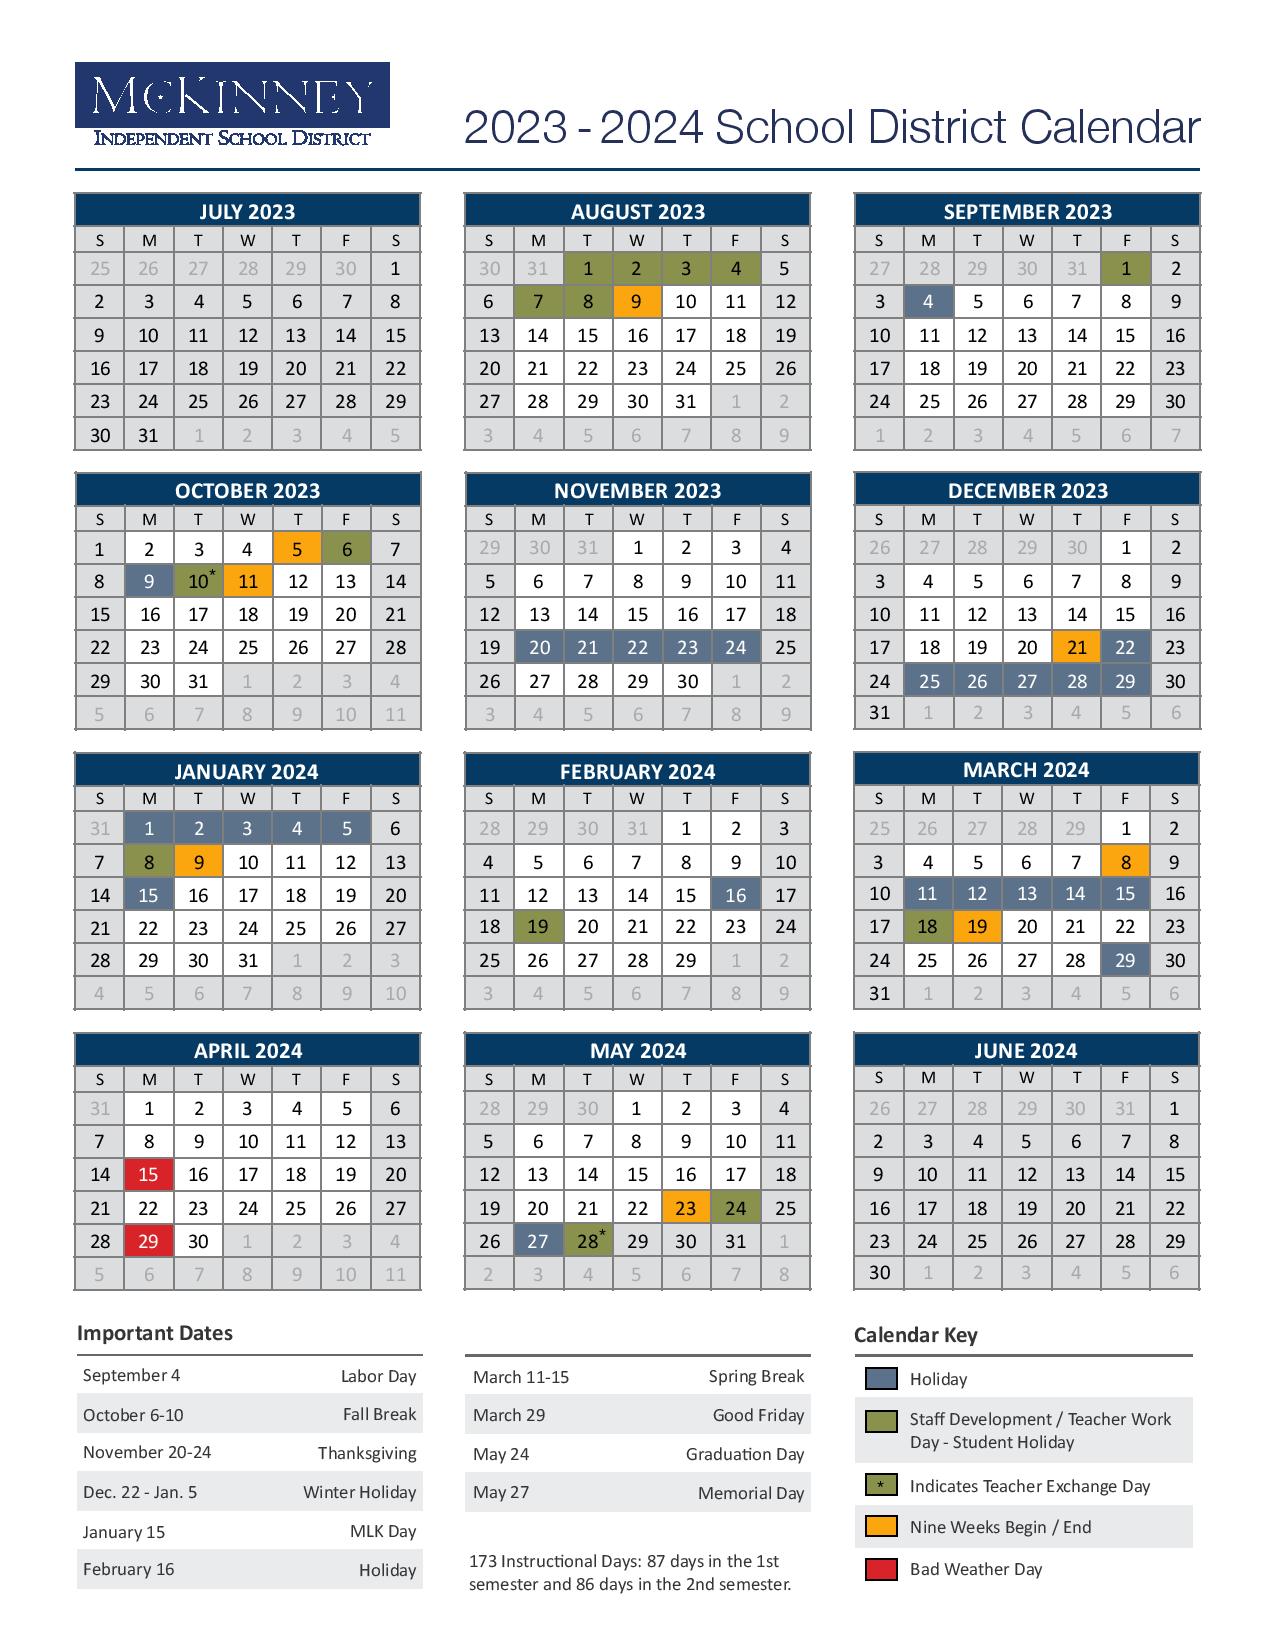 McKinney Independent School District Calendar 2023-2024